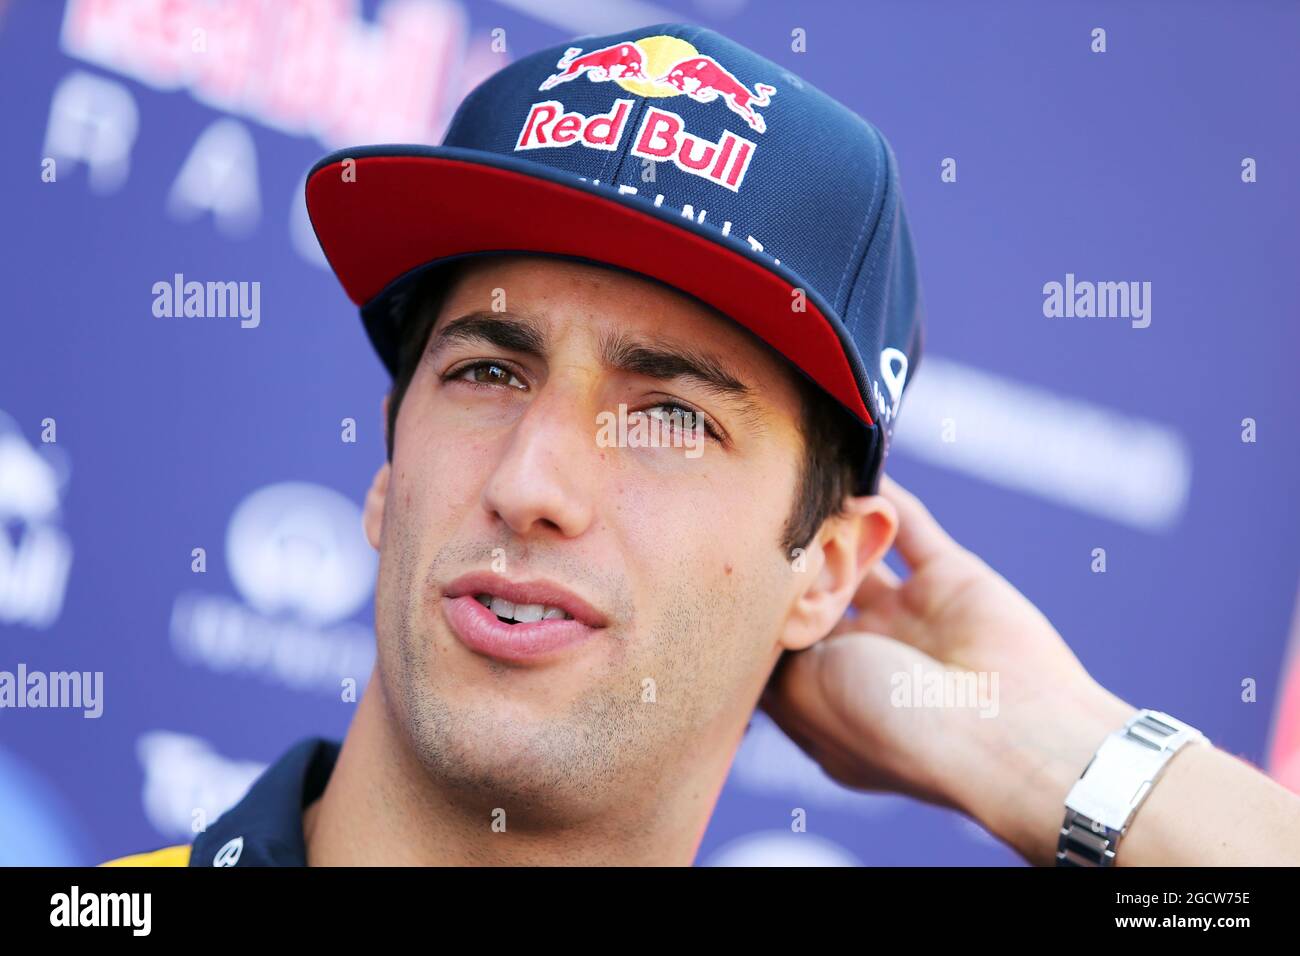 Daniel Ricciardo (AUS) Red Bull Racing. Gran Premio de España, jueves 7th de mayo de 2015. Barcelona, España. Foto de stock